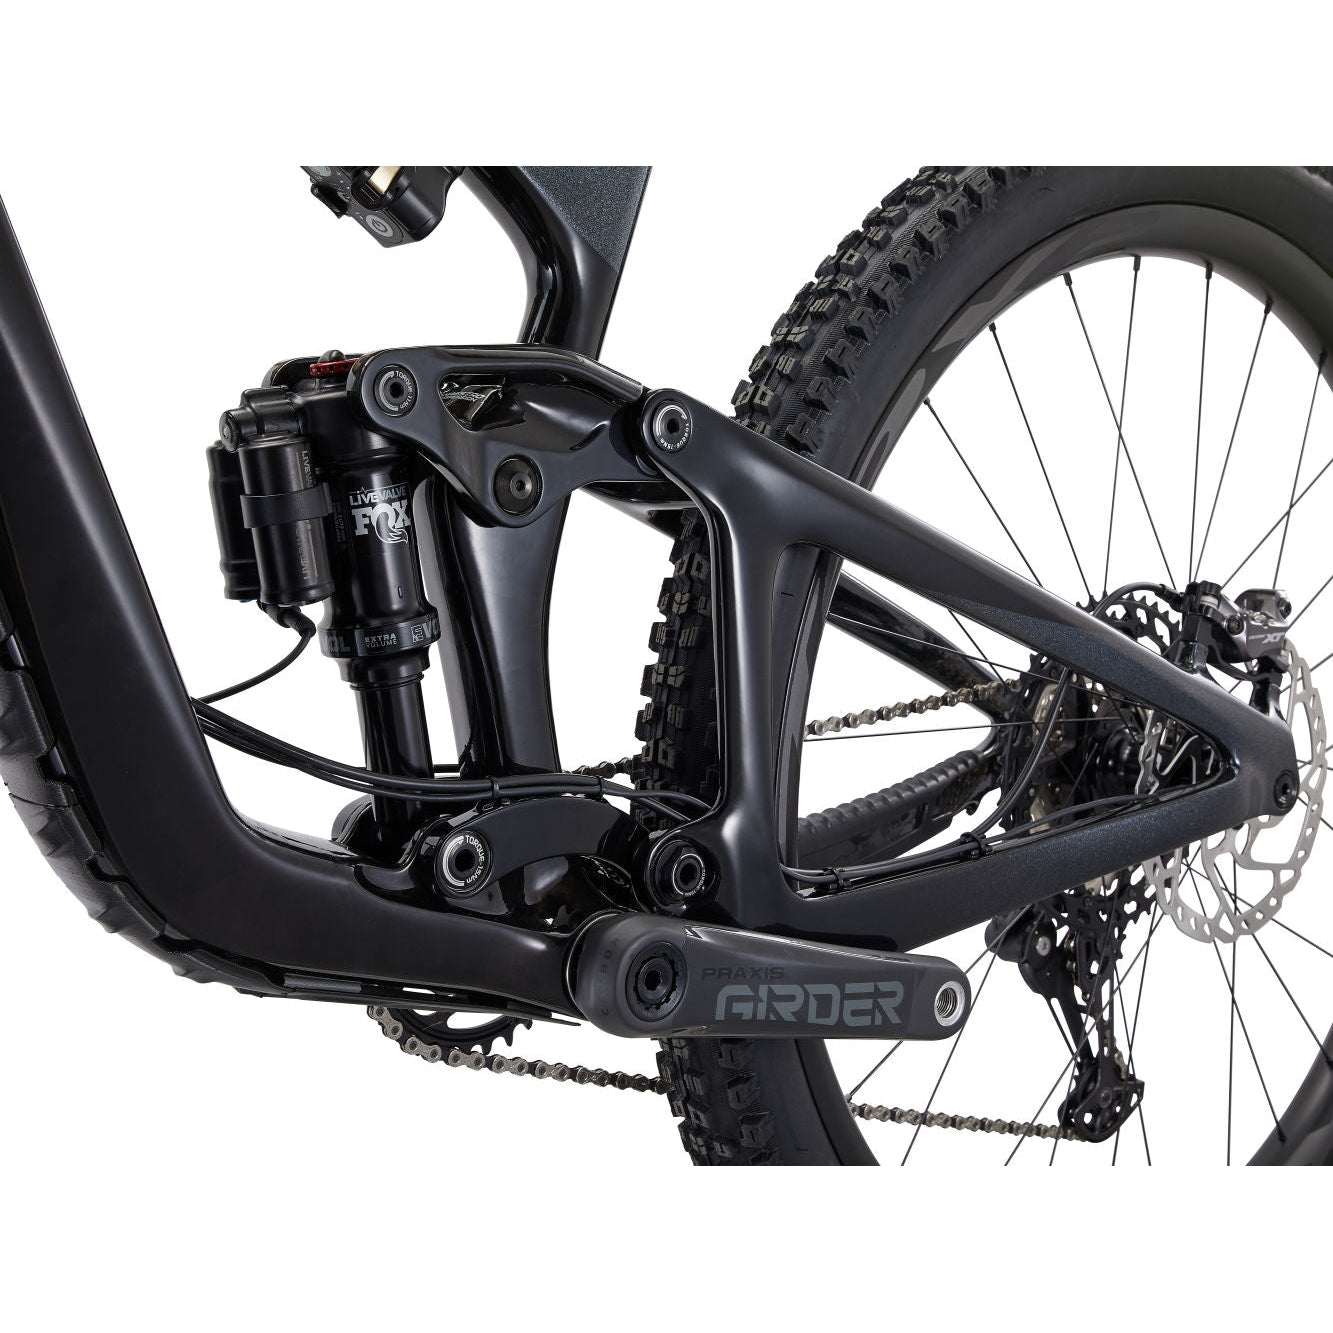 Giant Trance Advanced Pro 1 29er Full Suspension Mountain Bike - Bikes - Bicycle Warehouse